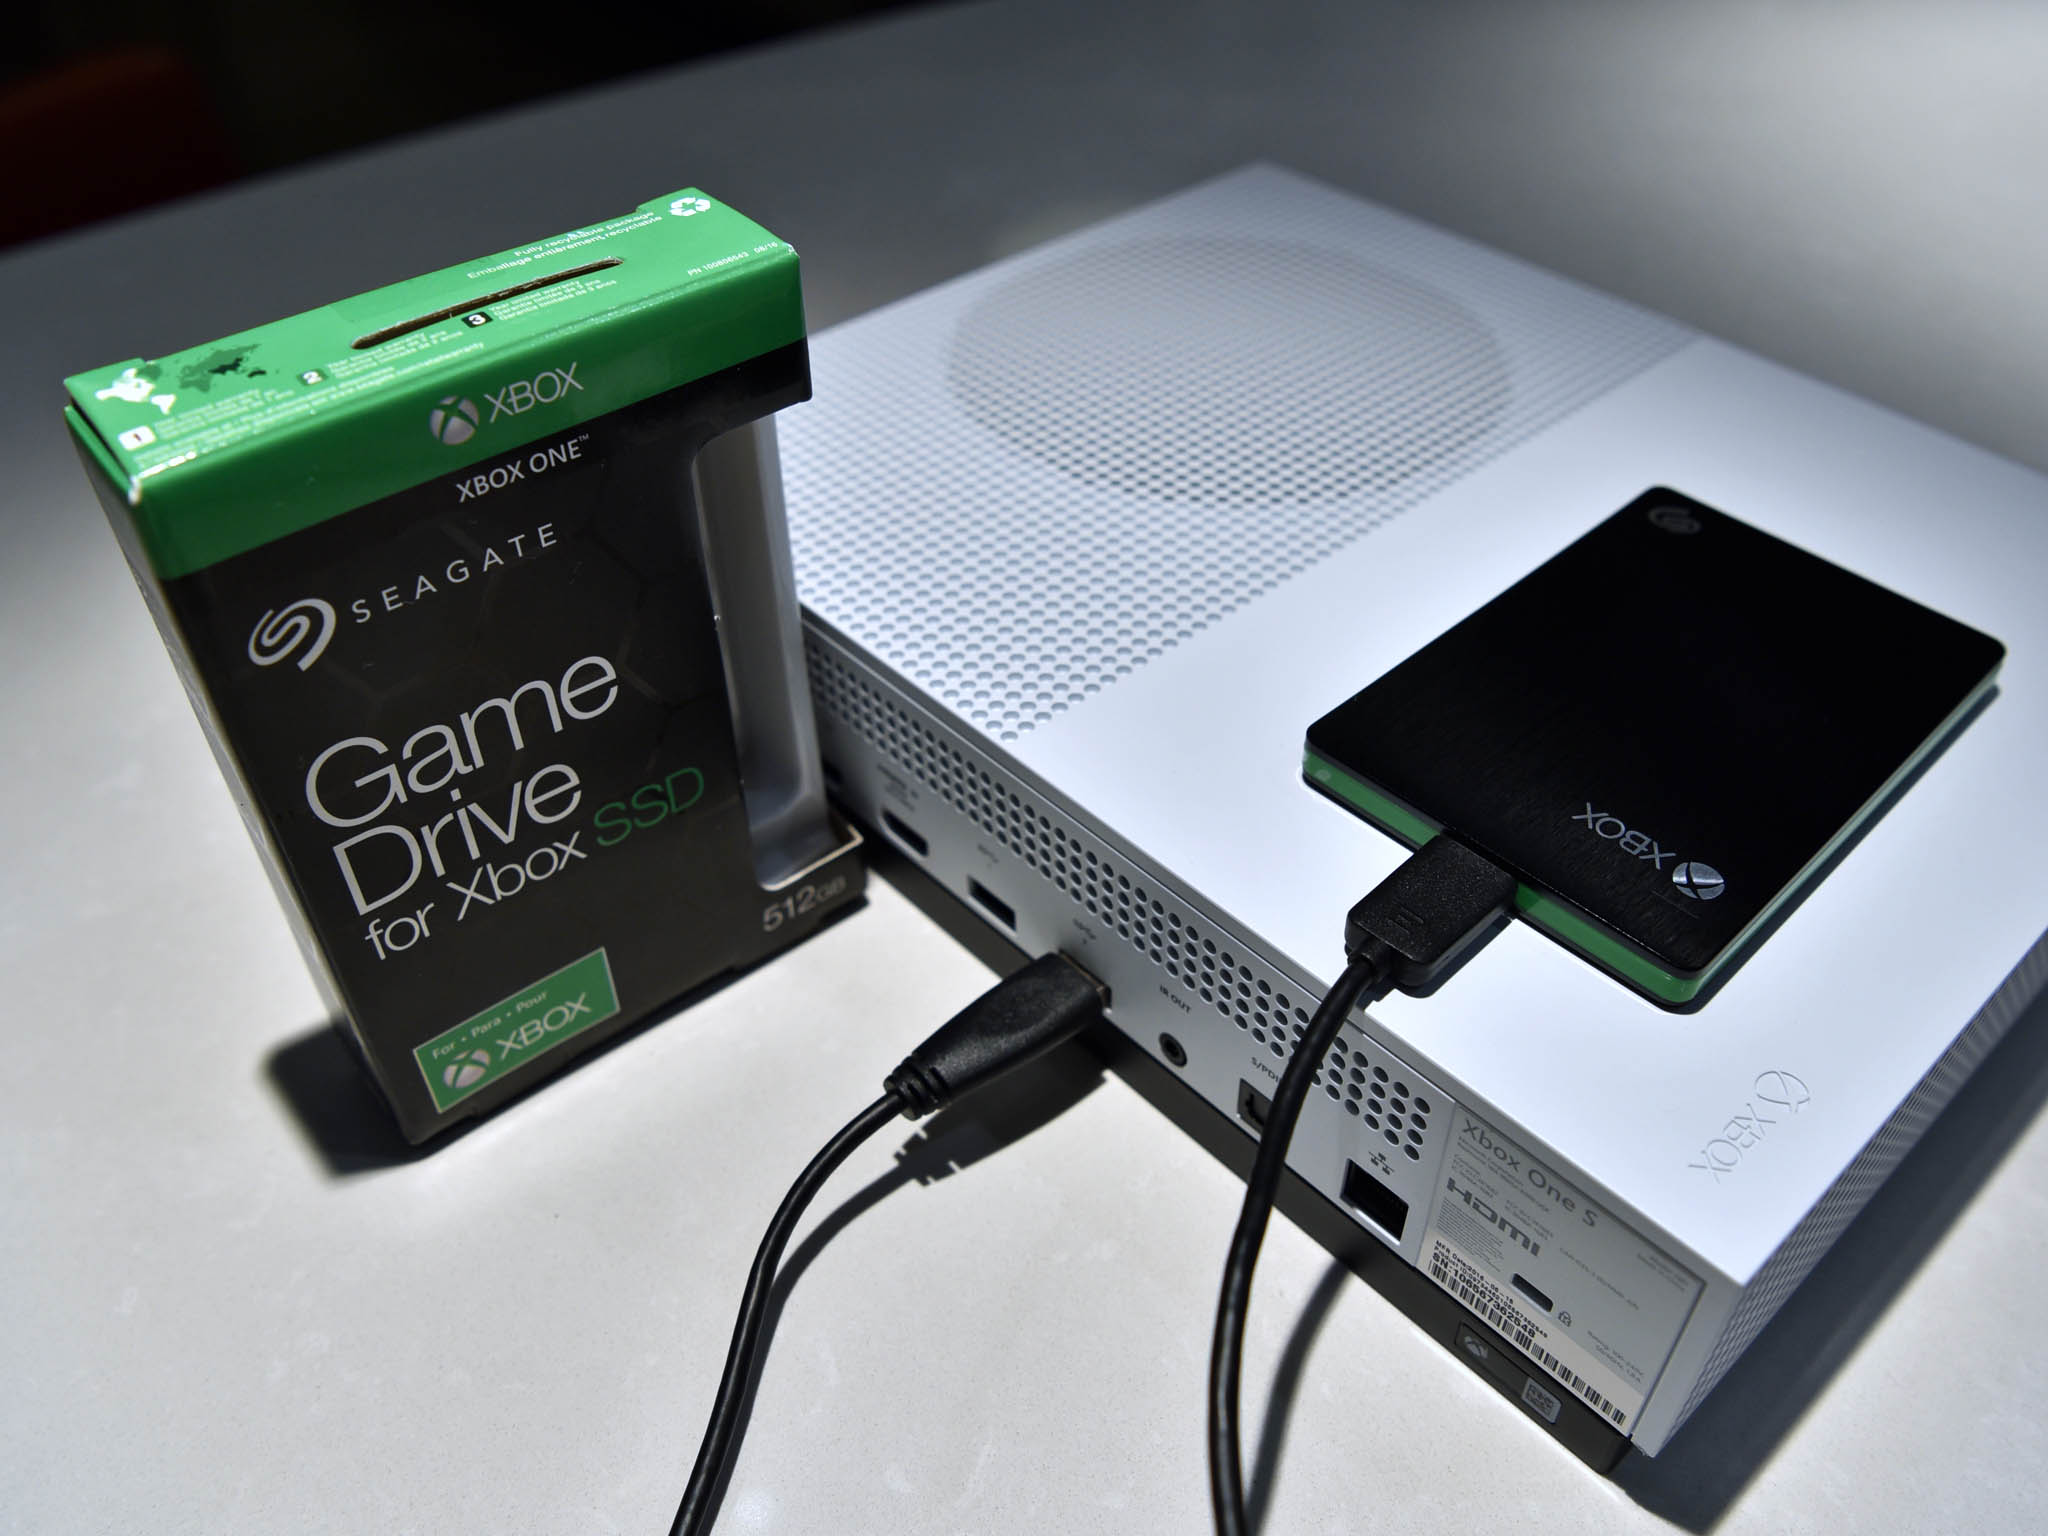 Xbox external drive